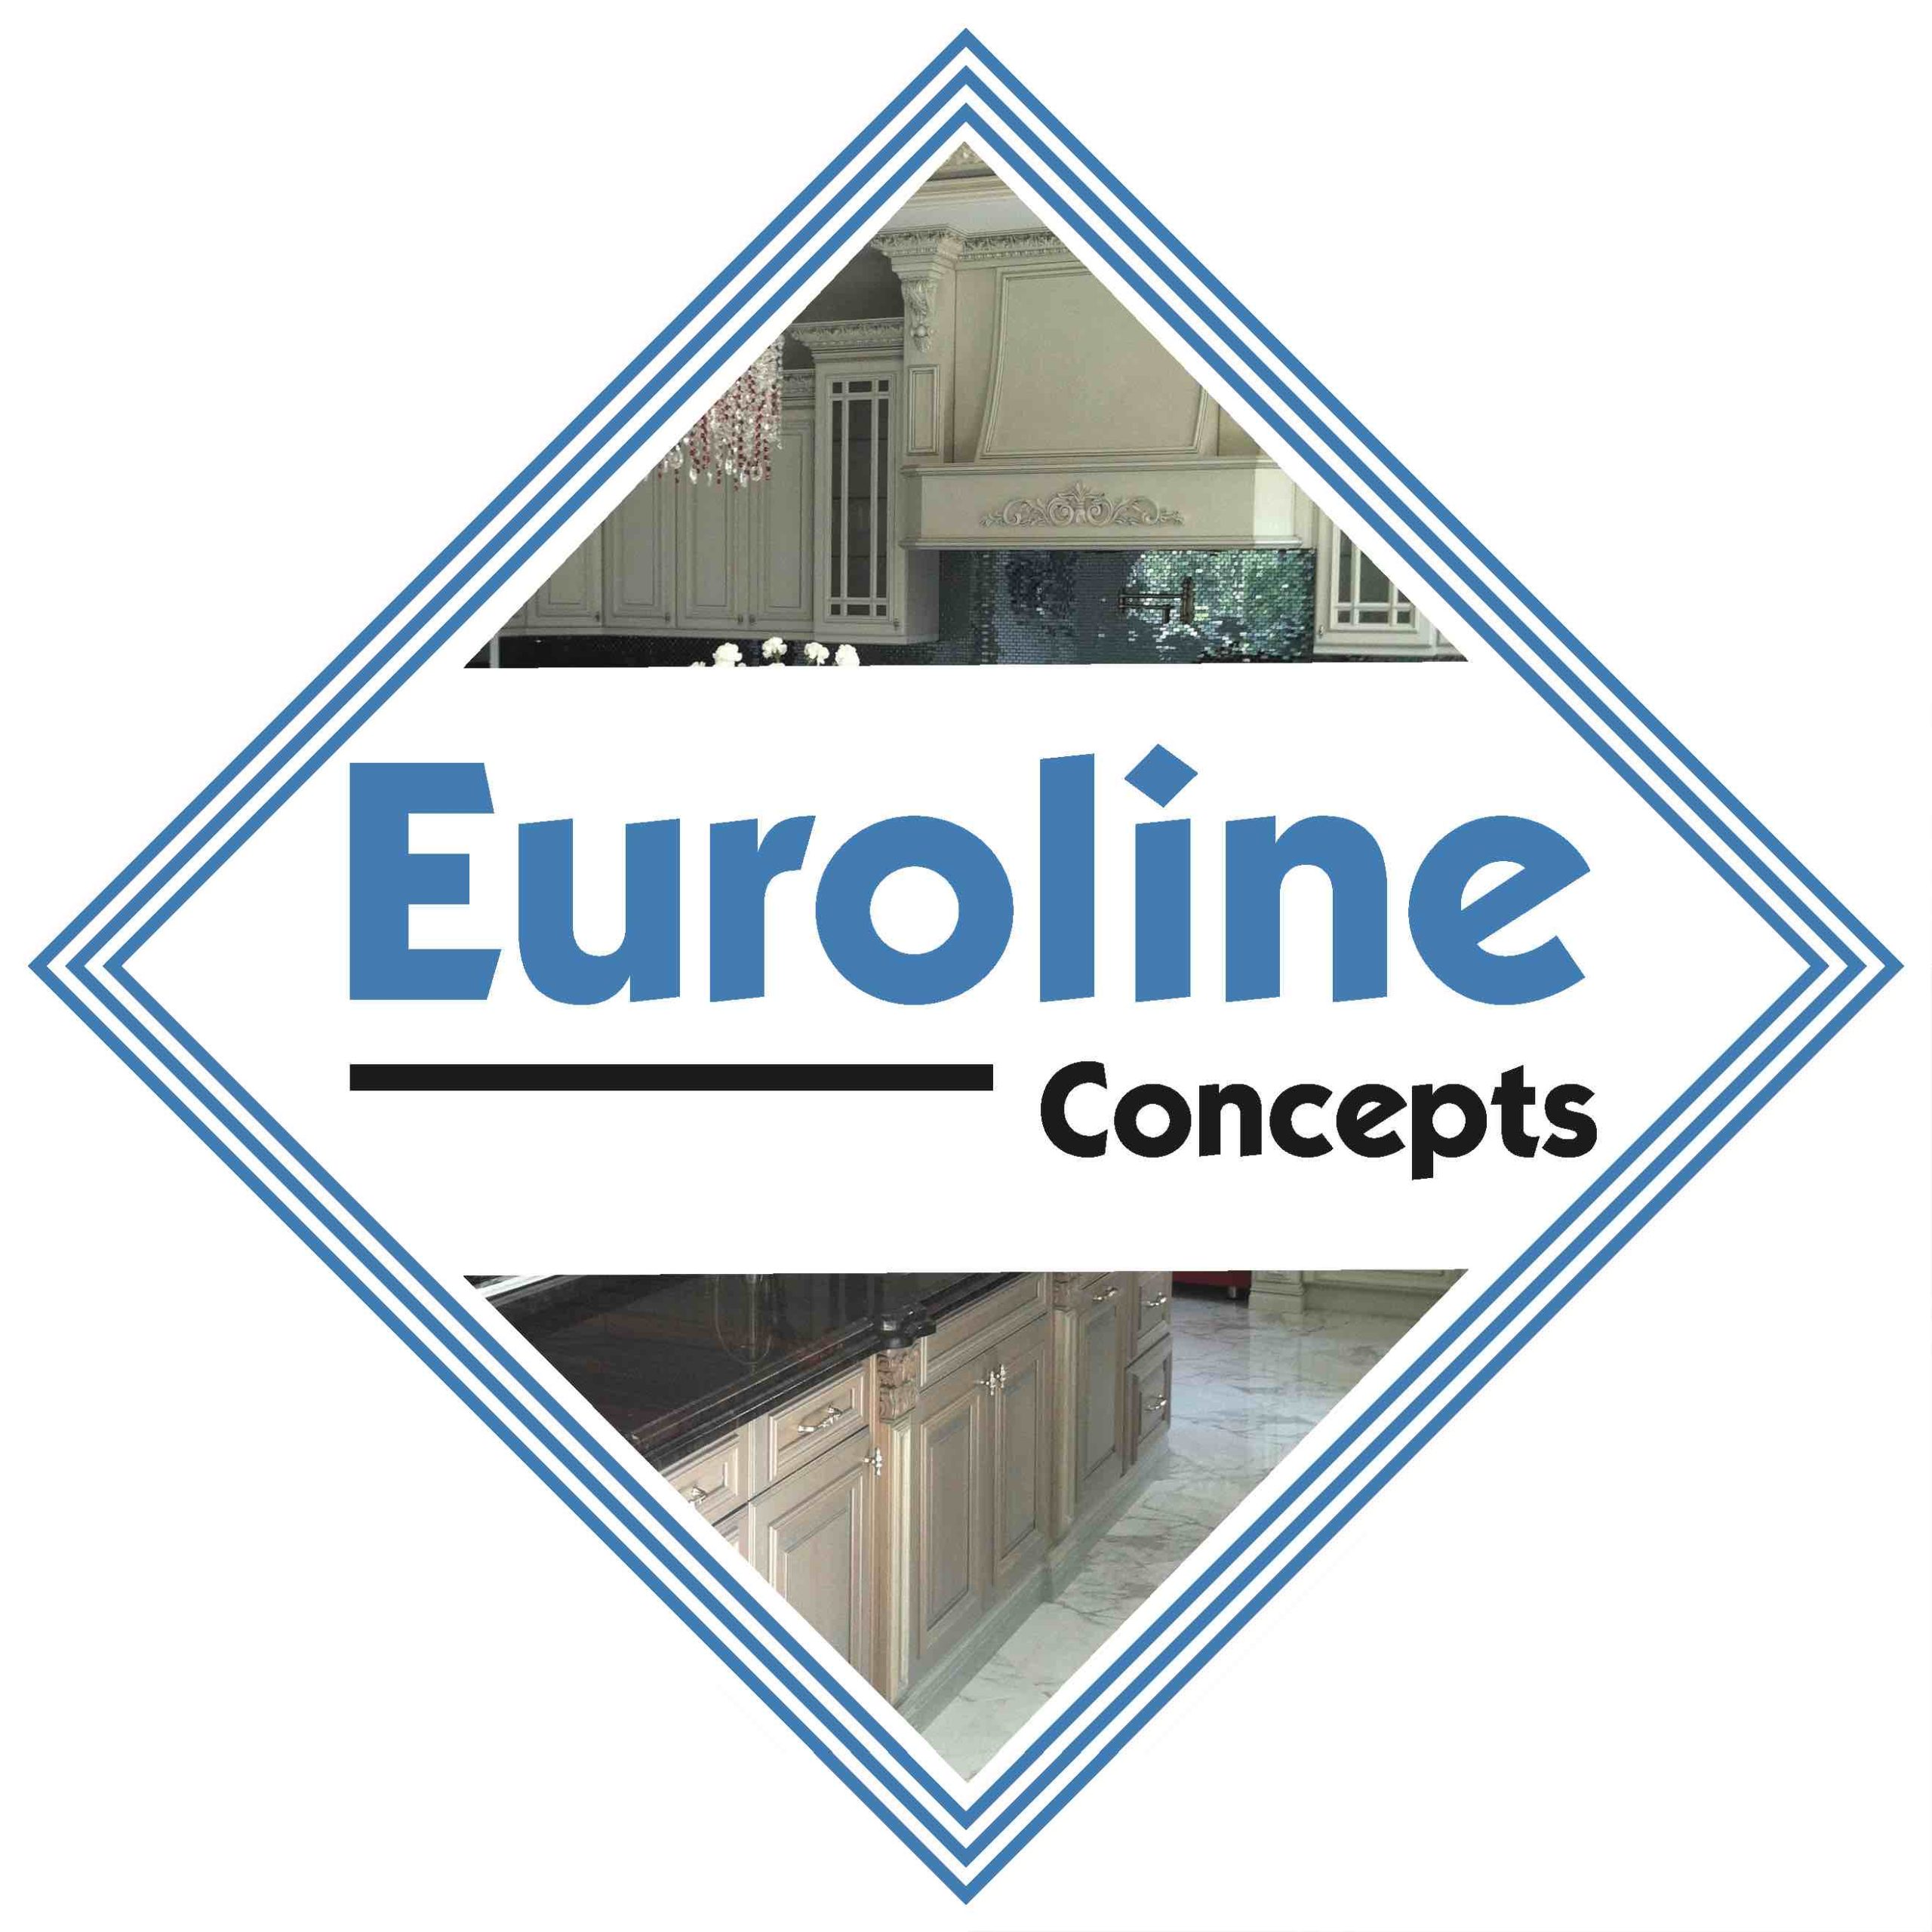 Euroline Concepts